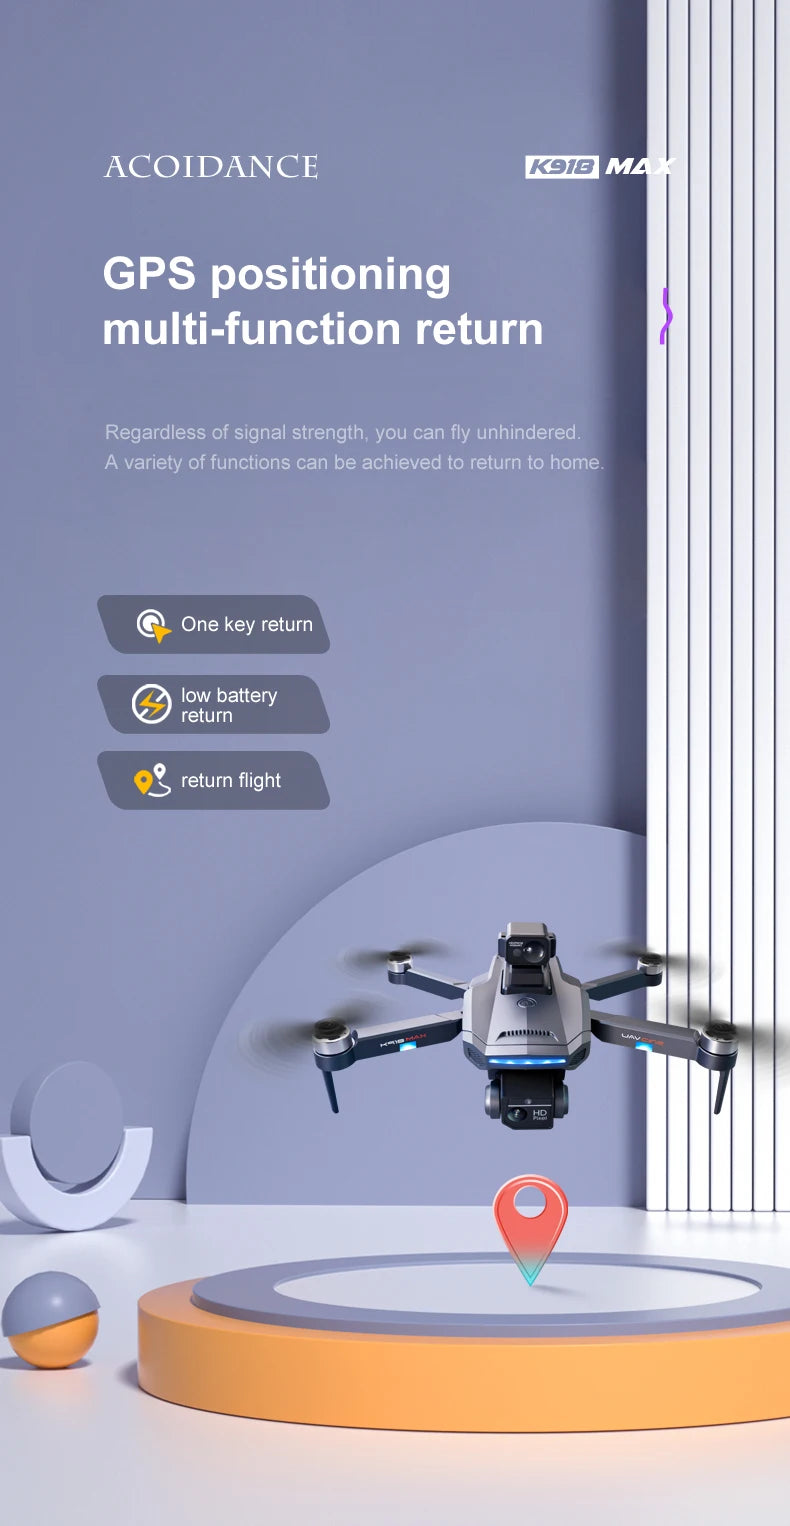 XYRC K918 MAX GPS Drone, ACOIDANCE K91o MA GPS positioning multi-function return flight tana